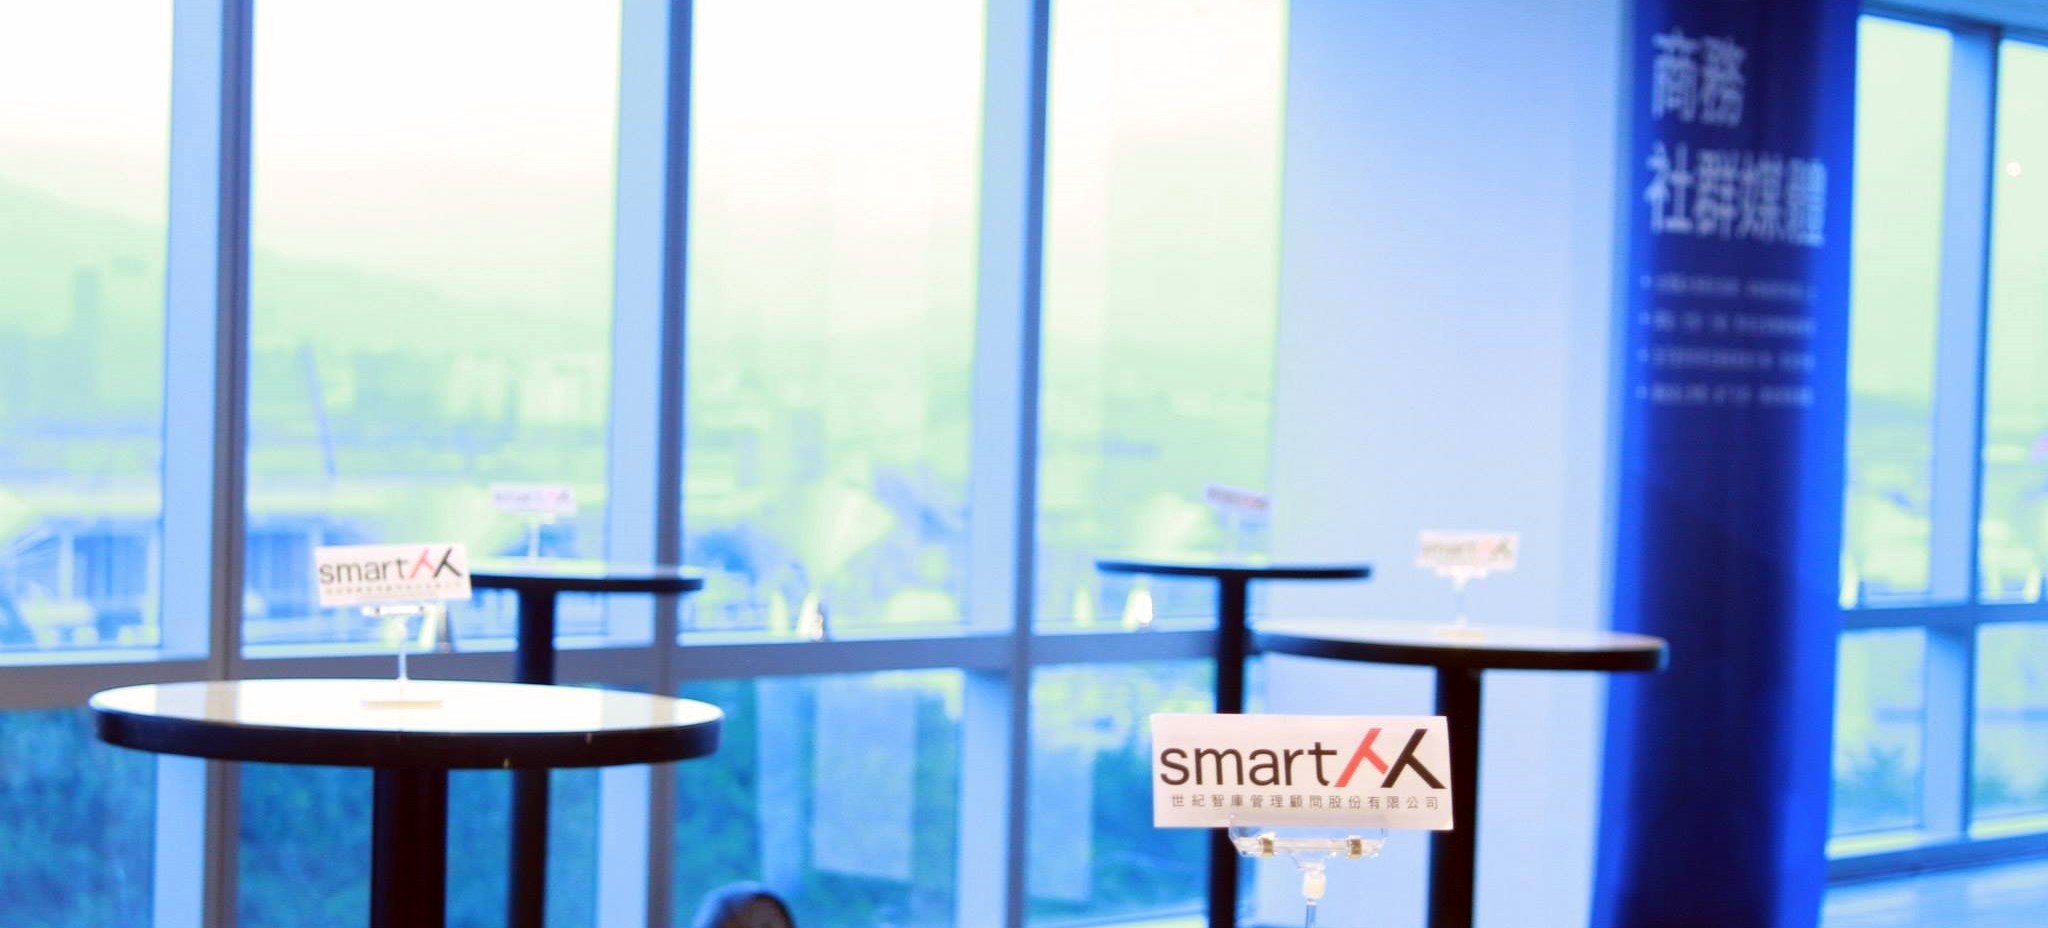 SmartM 五月10篇精選好文：一次掌握電子商務、網路行銷大小事